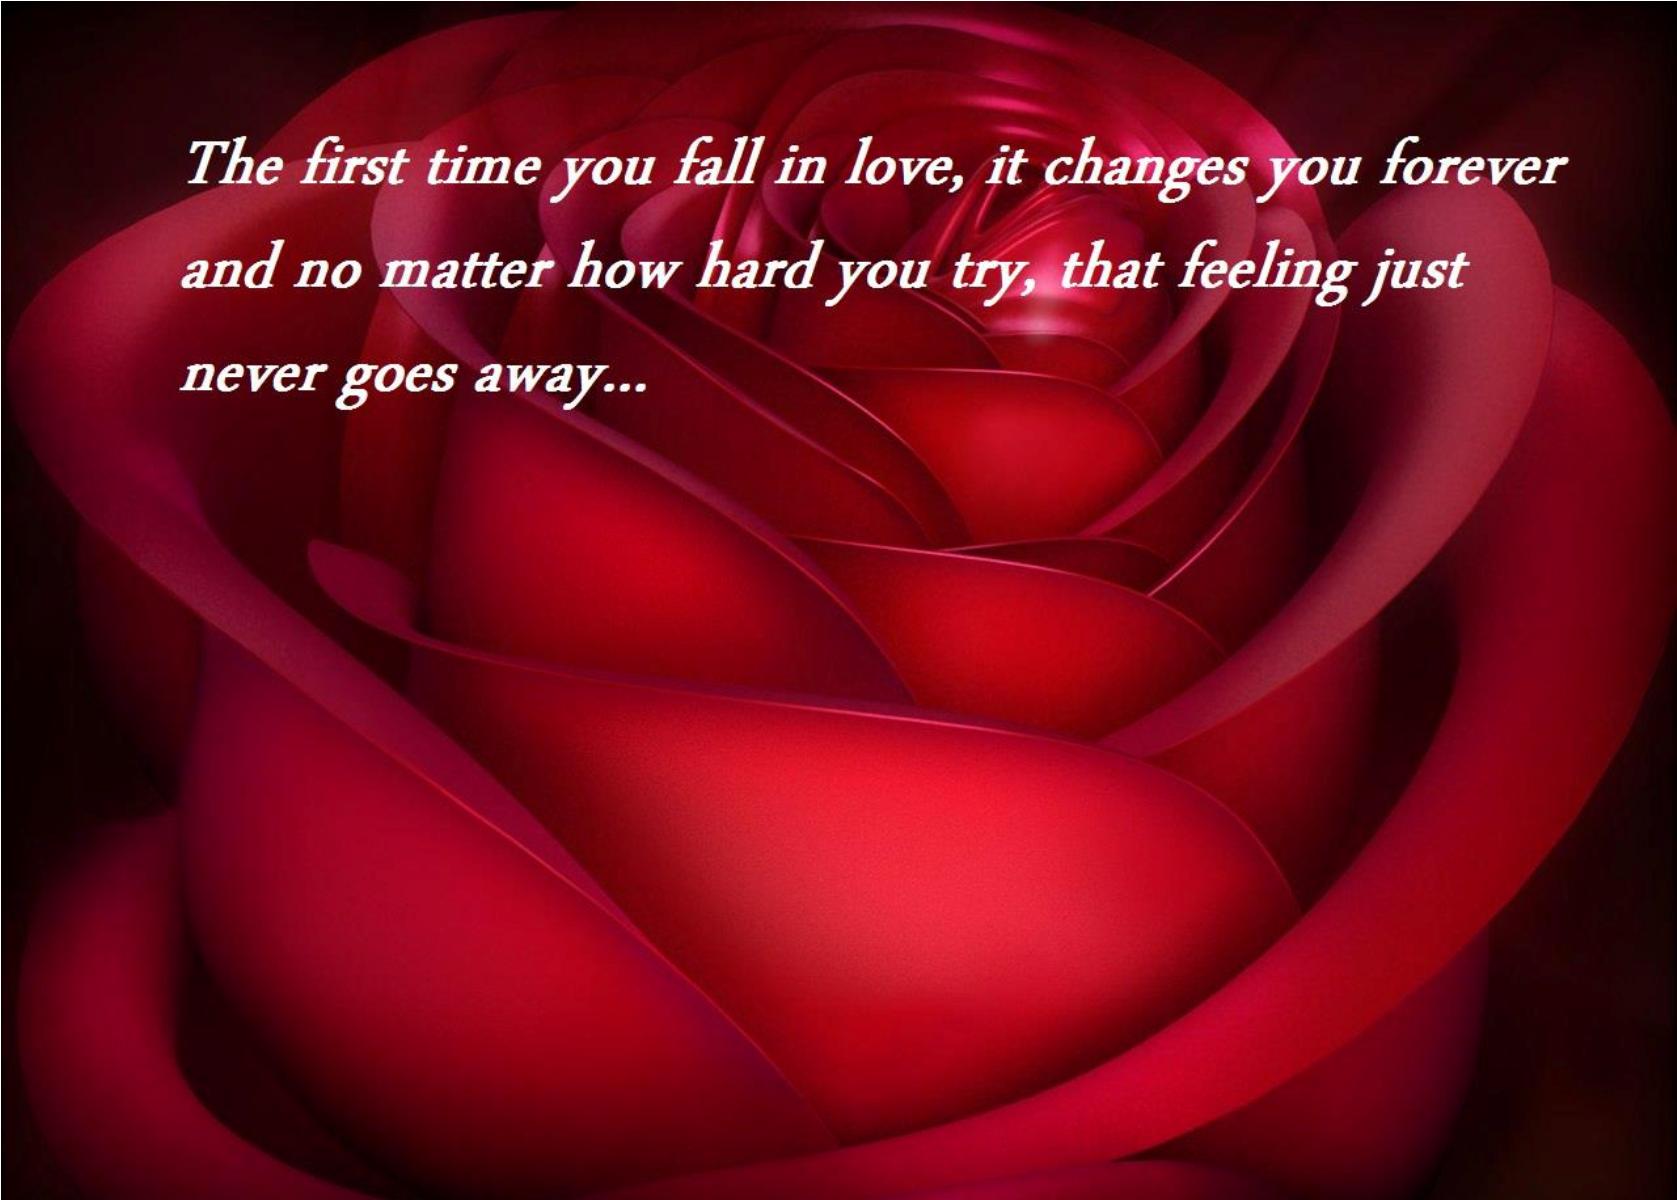 Rose weeks. Valentine's Day Date. Poem for Valentine Day. Valentine week. Love "Forever changes".